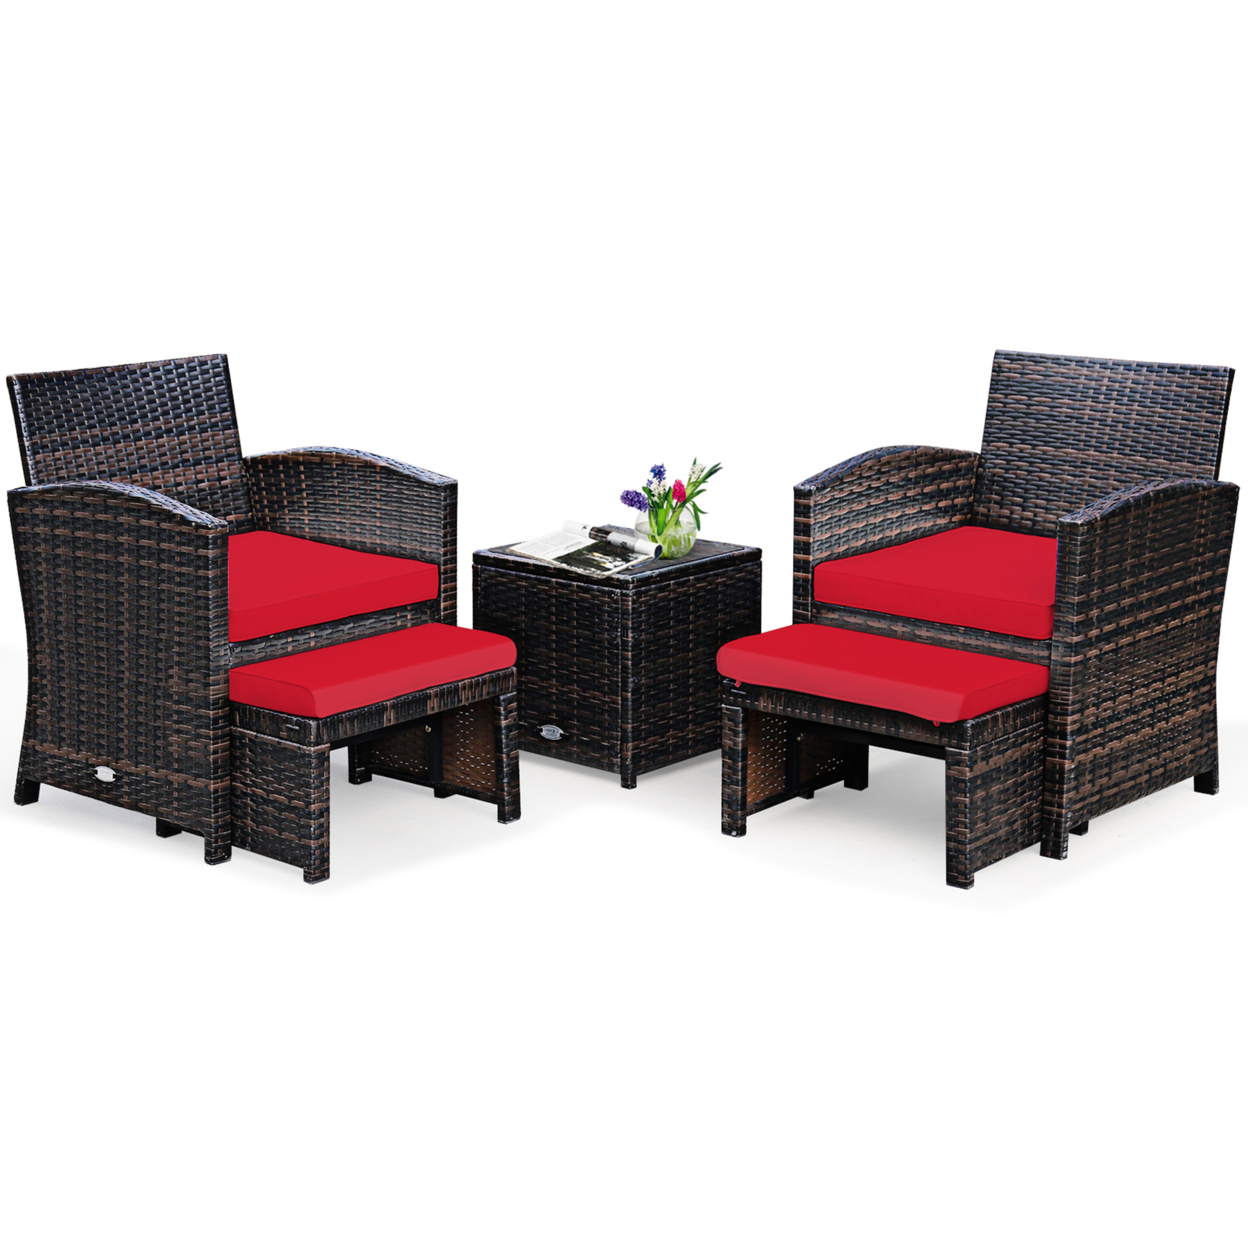 5PCS Rattan Patio Furniture Set Chair & Ottoman Set W/ Red Cushions